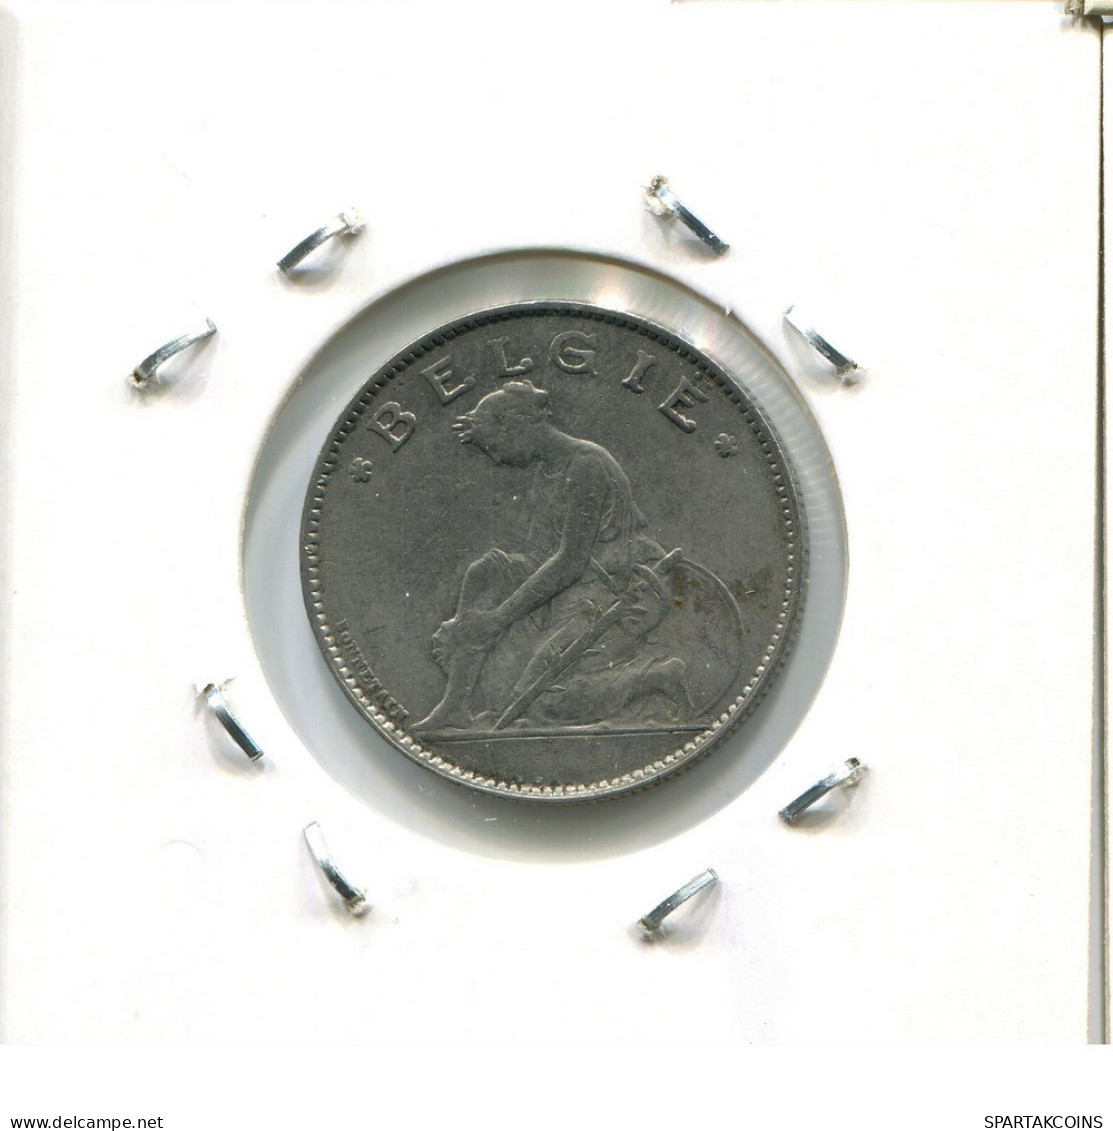 1 FRANC 1922 DUTCH Text BELGIEN BELGIUM Münze #AU612.D.A - 1 Franc